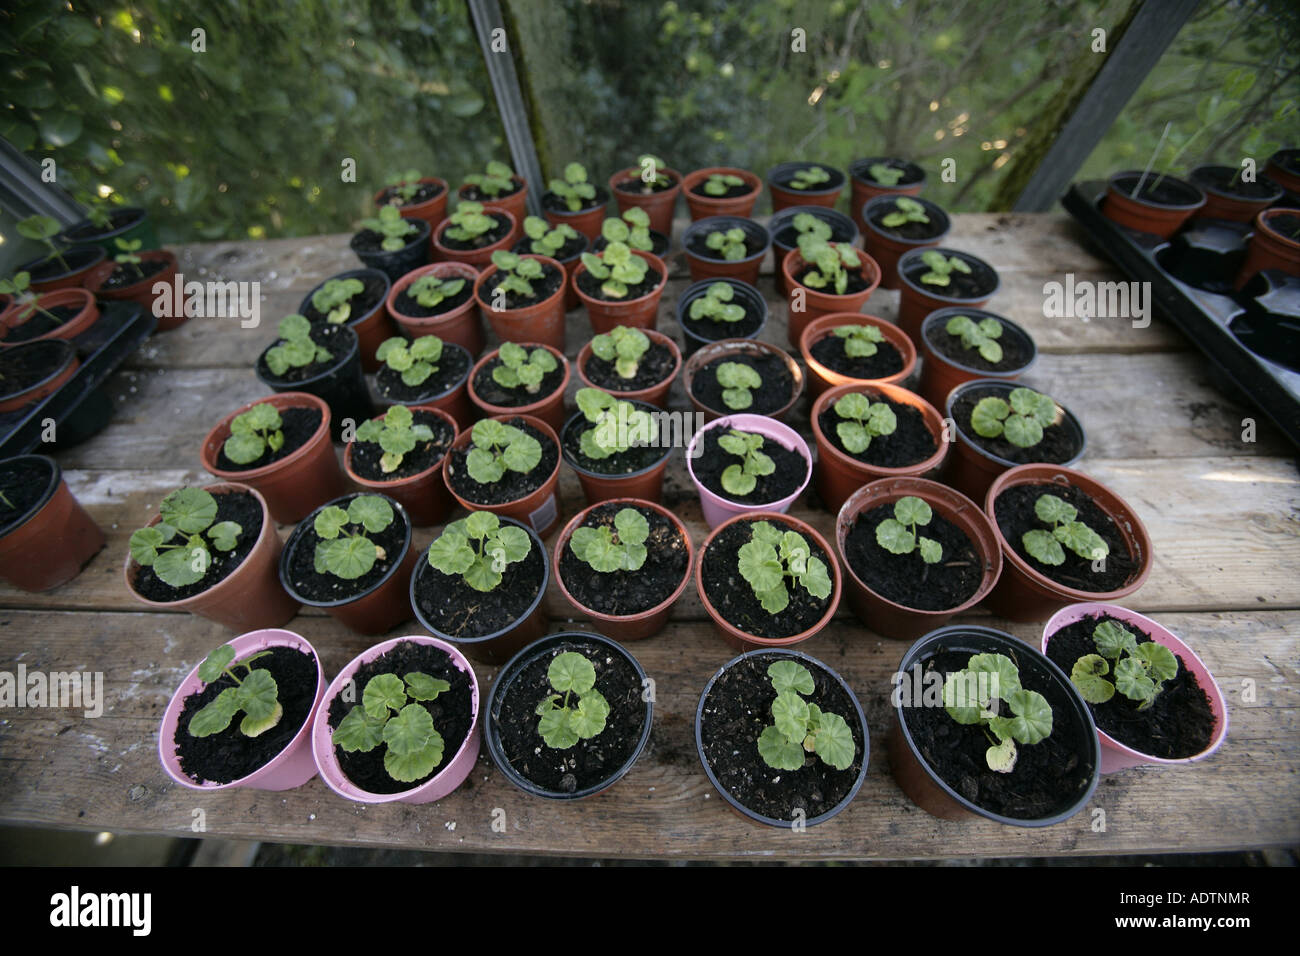 Geranium seedlings in plant pots. Stock Photo